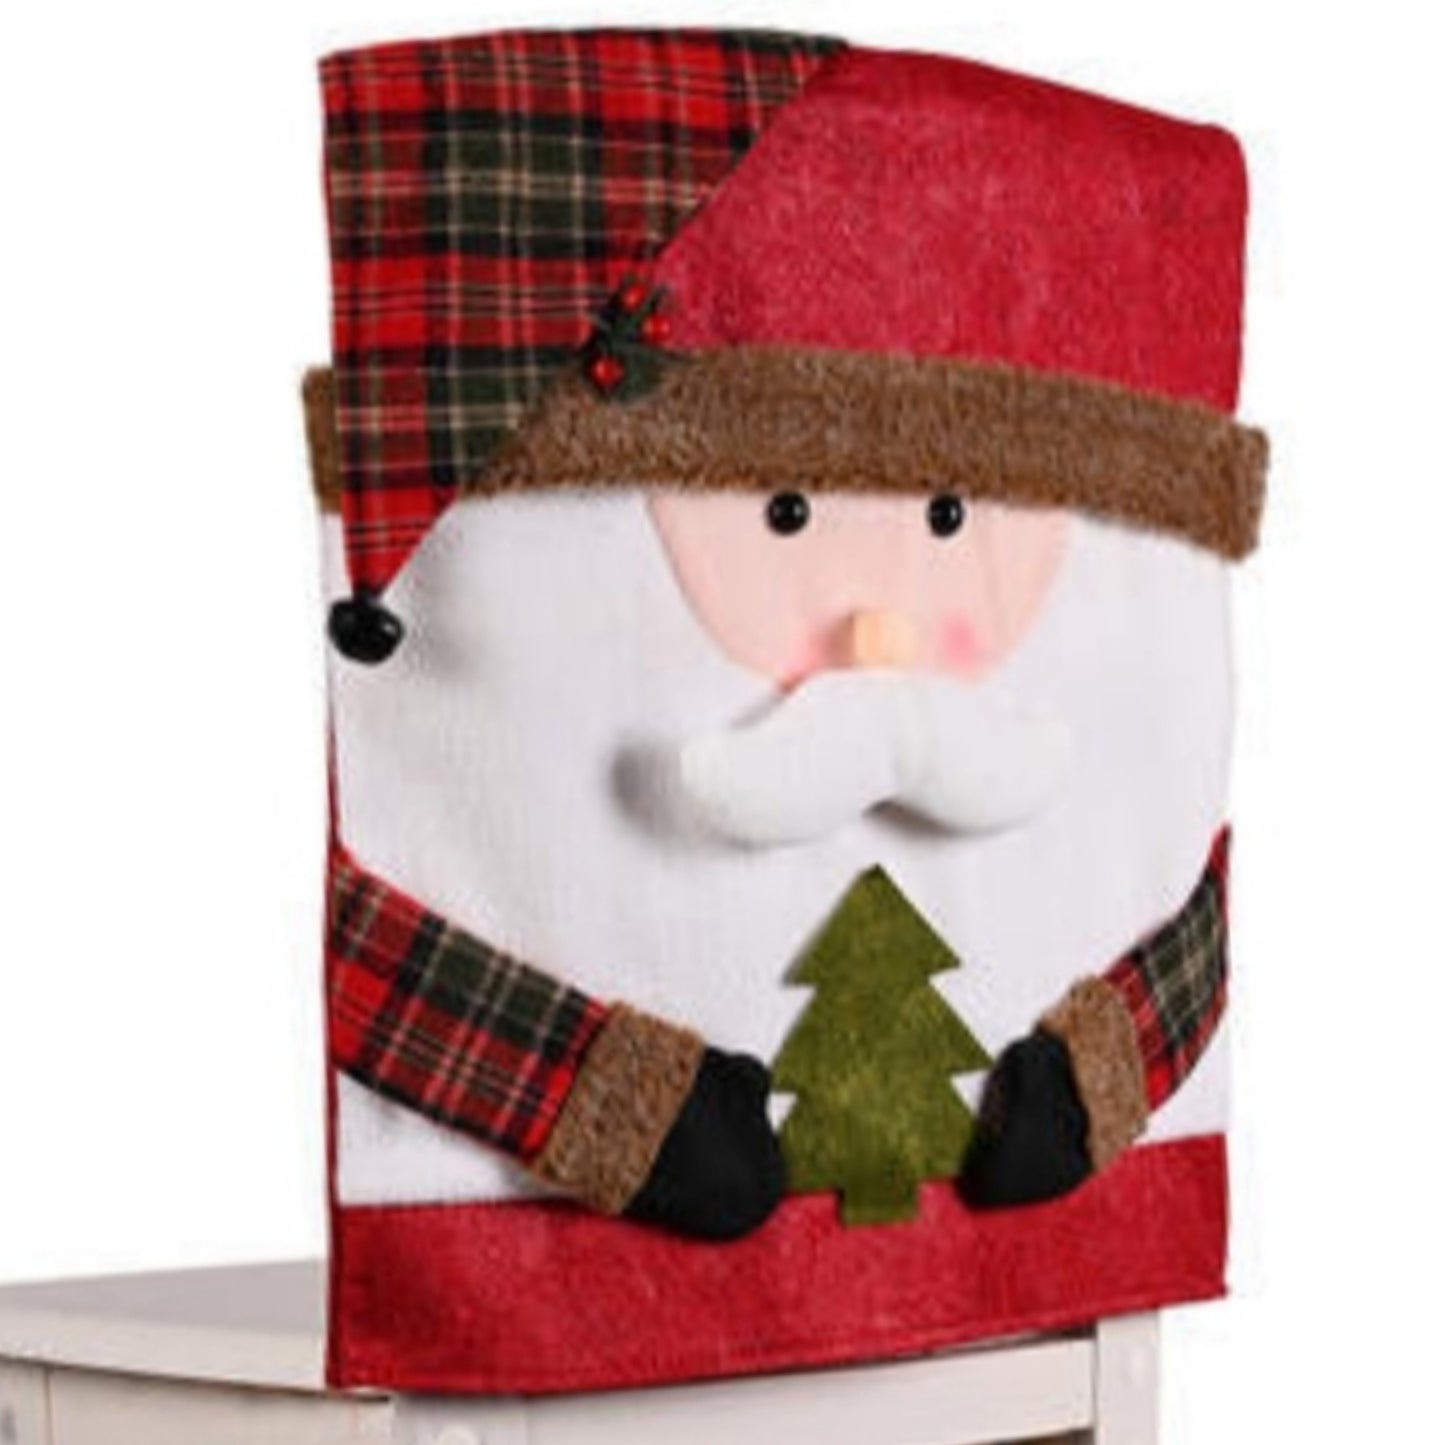 Santa Claus, Snowman, Reindeer Premium Christmas Festive 3D Chair Slip Cover Home Decor